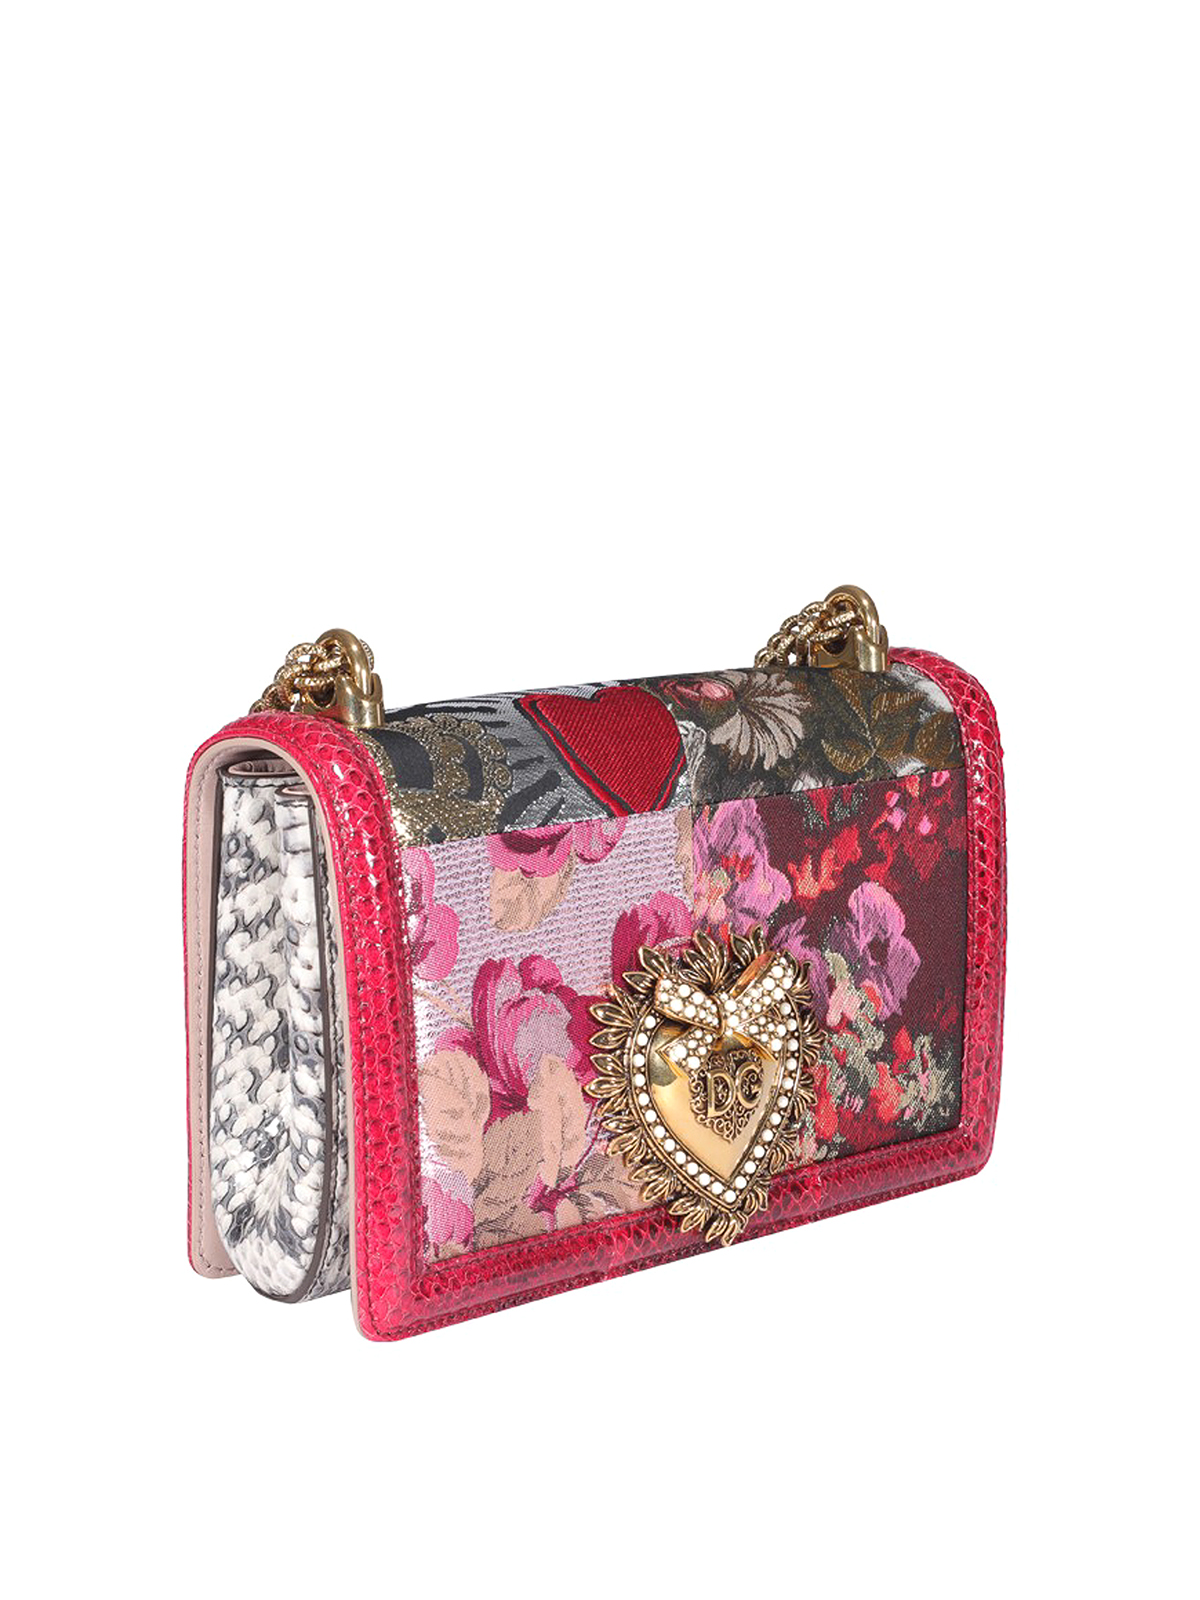 amerikansk dollar radium Perversion Cross body bags Dolce & Gabbana - Devotion floral printed bag -  BB6652A8M868J323